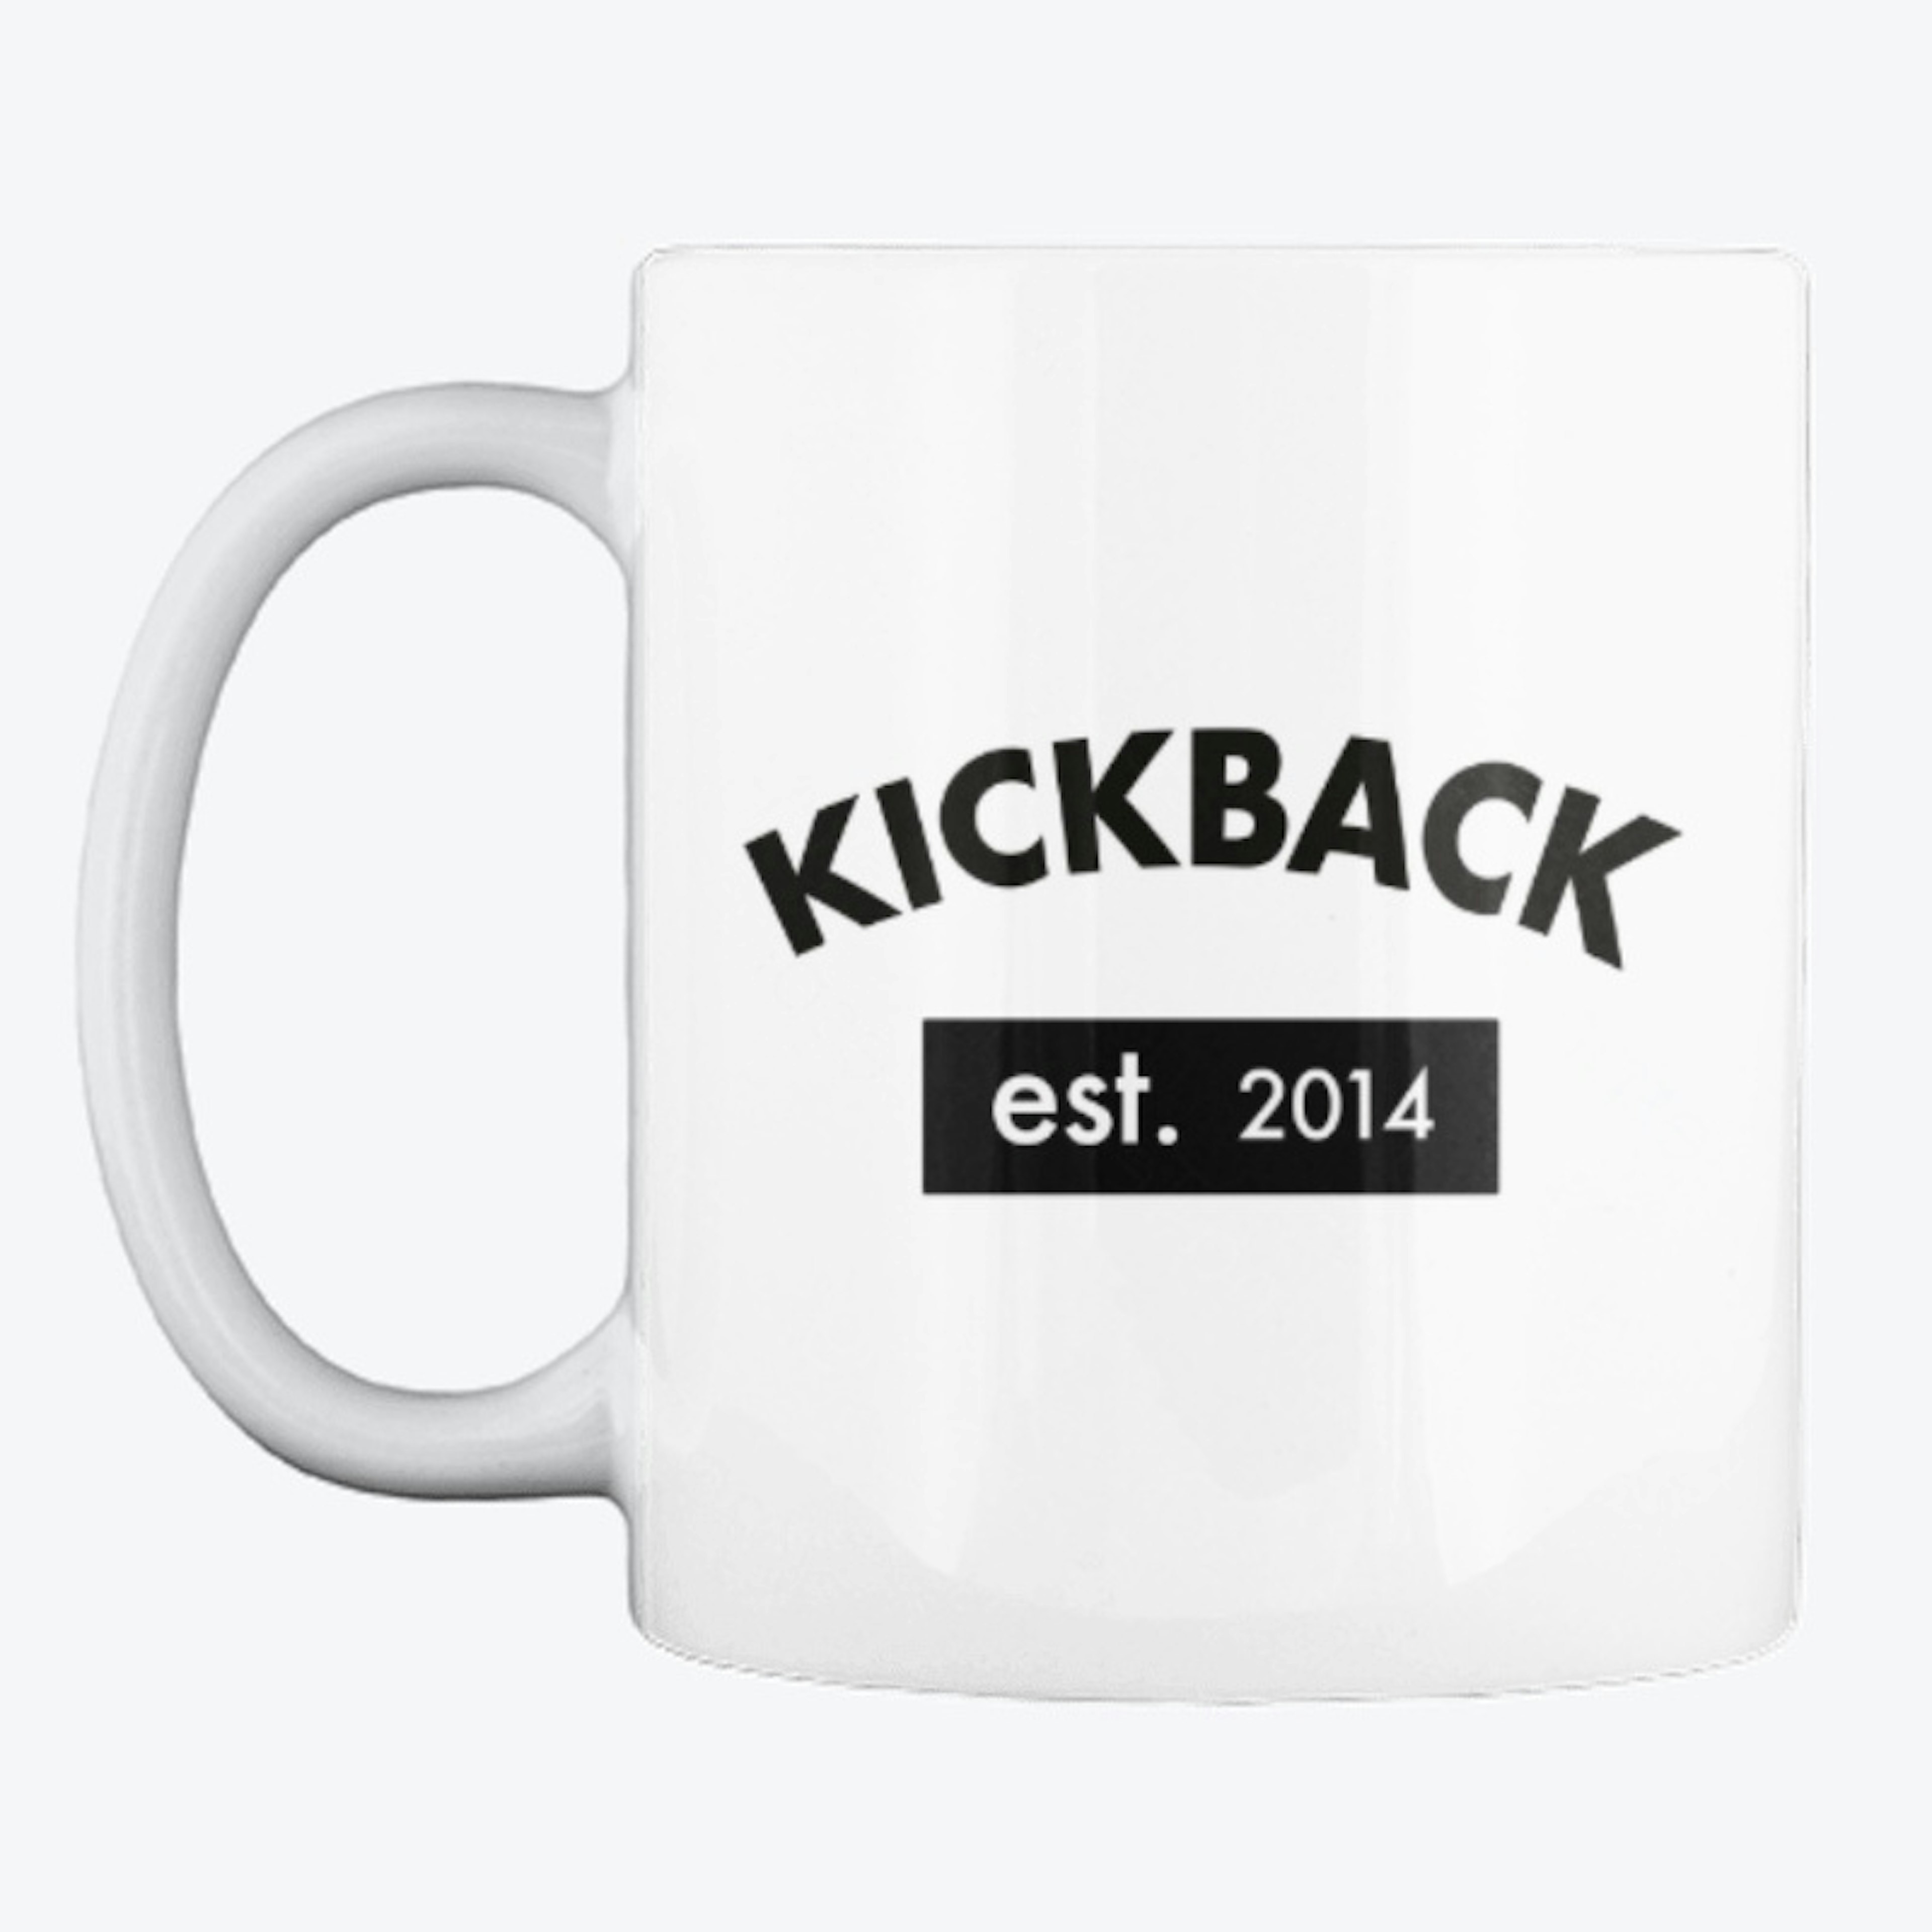 The Kickback Mug